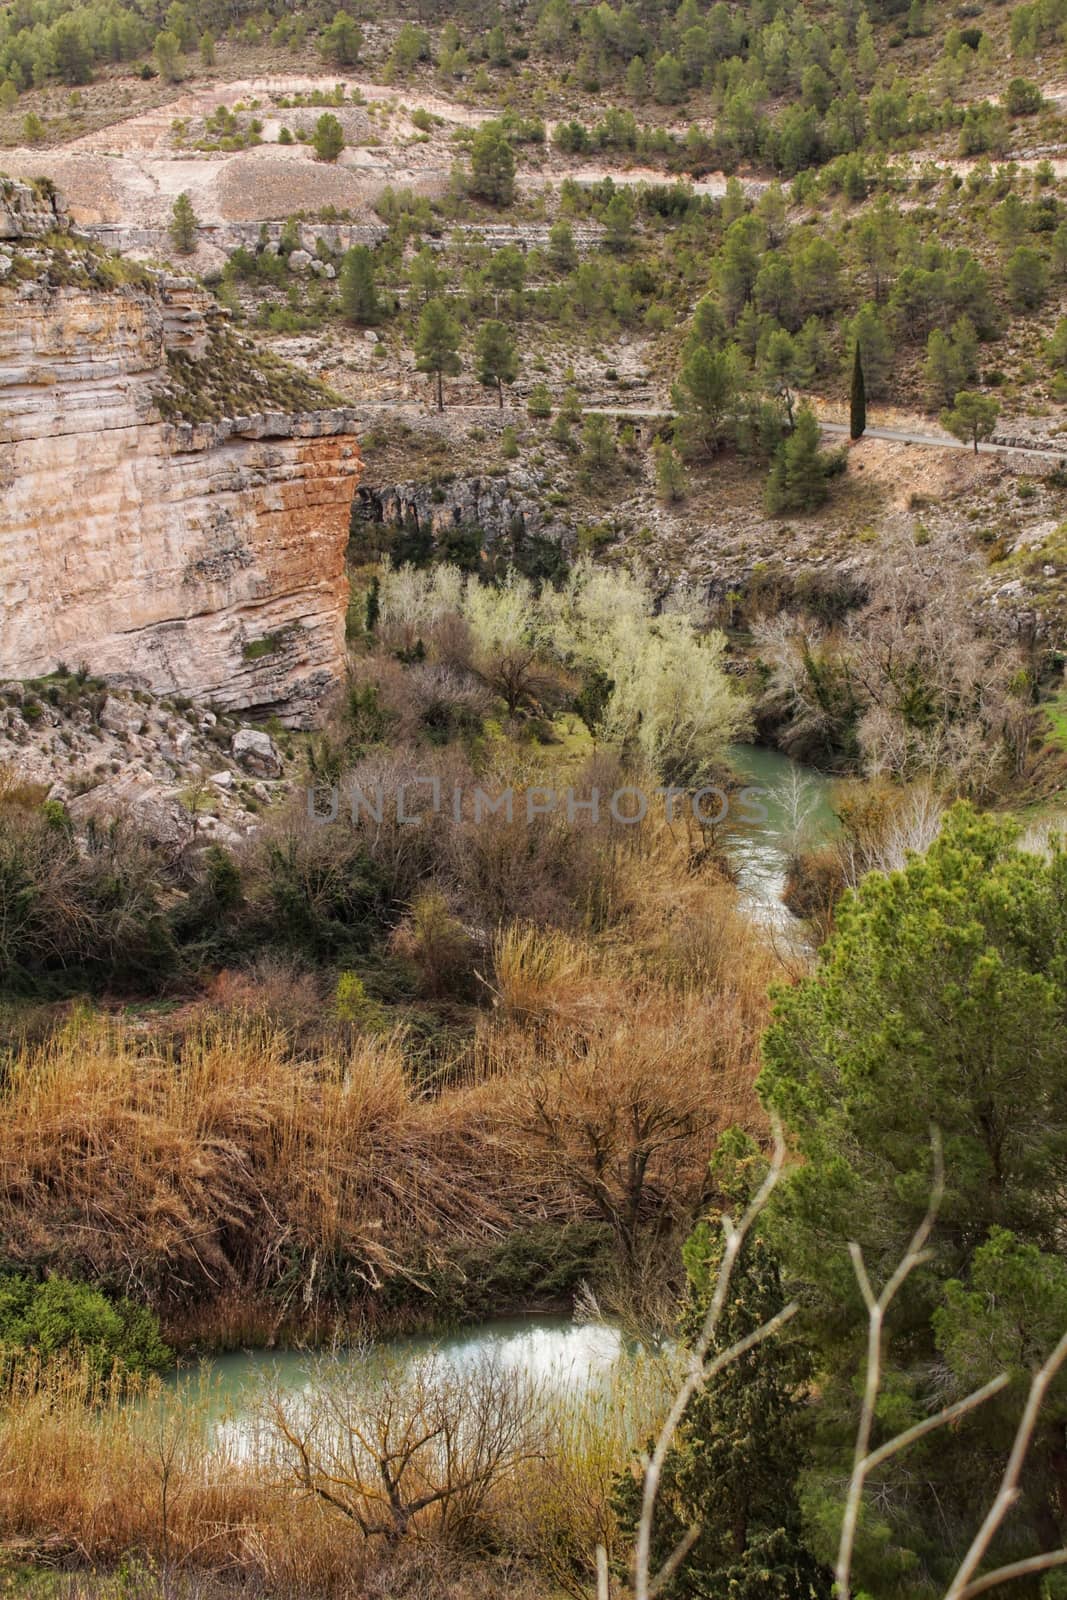 The River Jucar between vegetation by soniabonet